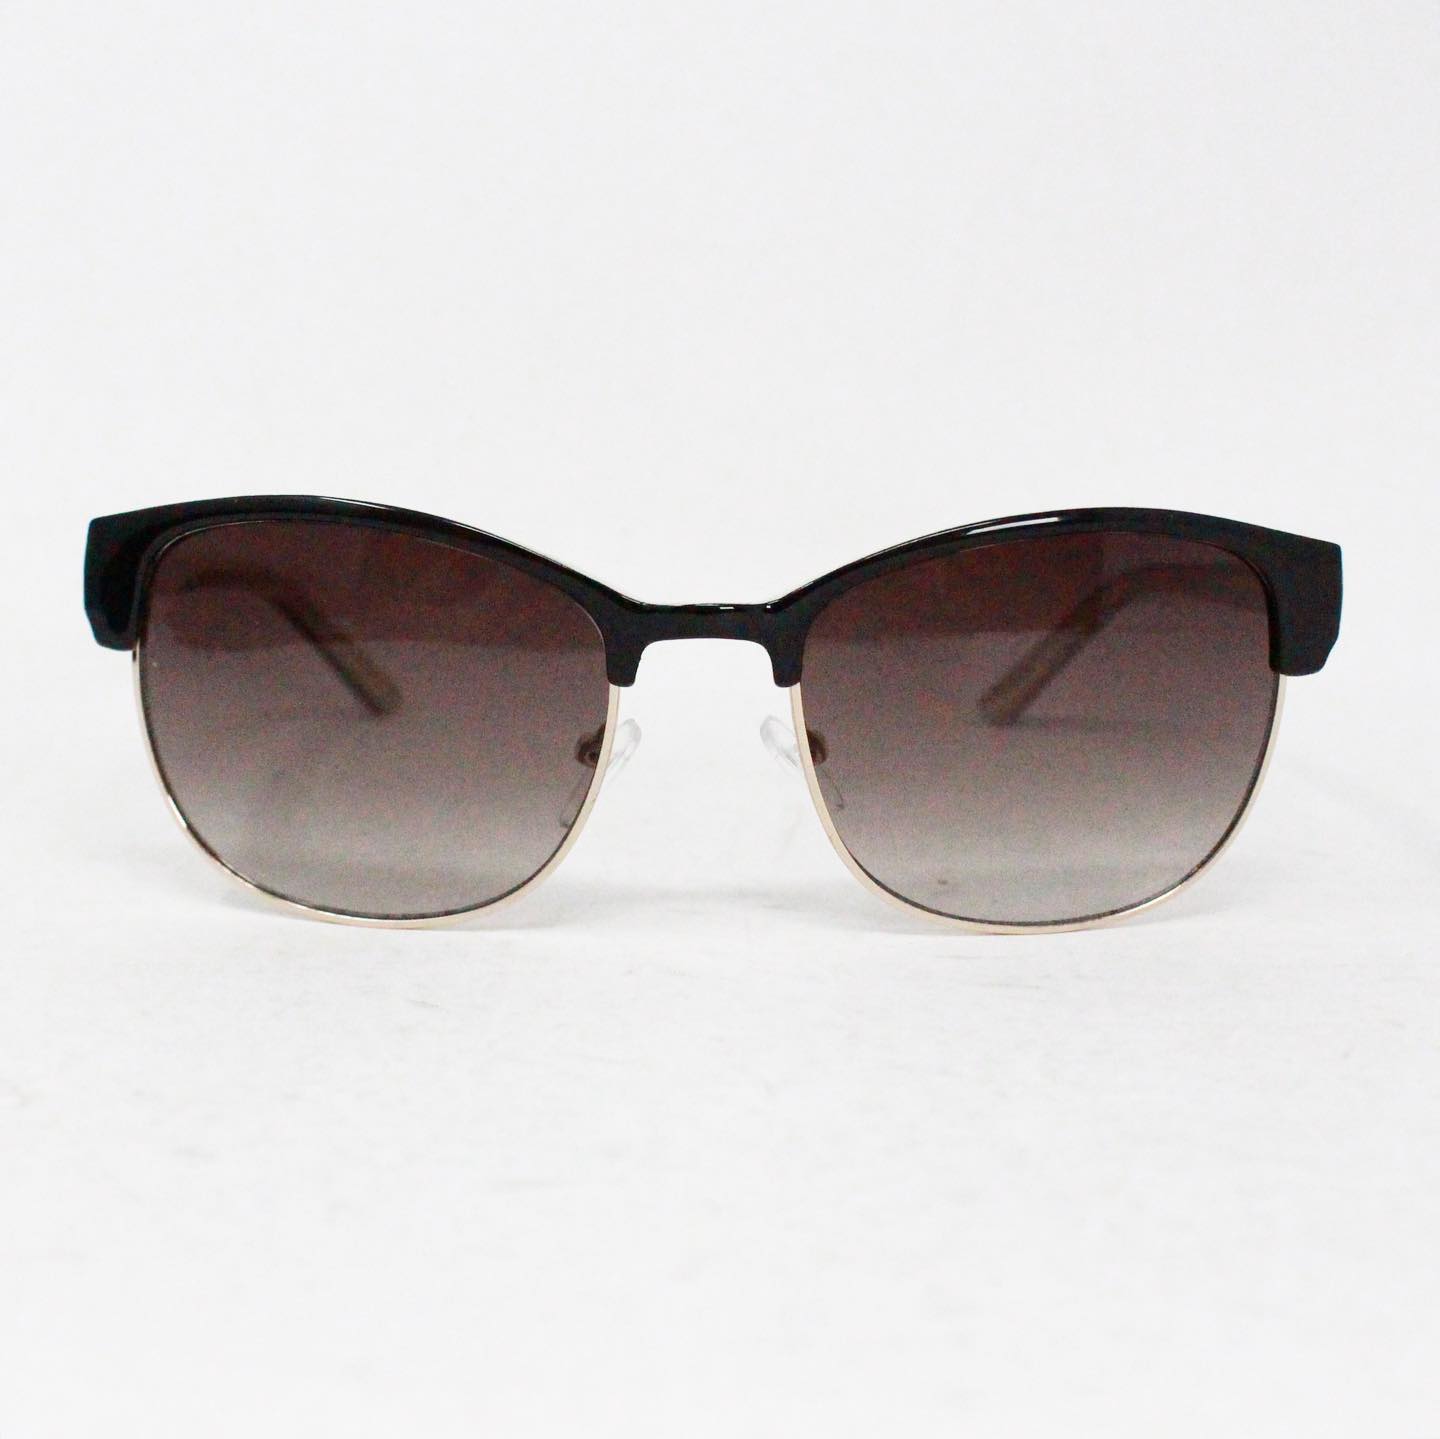 OSCAR DE LA RENTA 41496 Black Frame Sunglasses 6